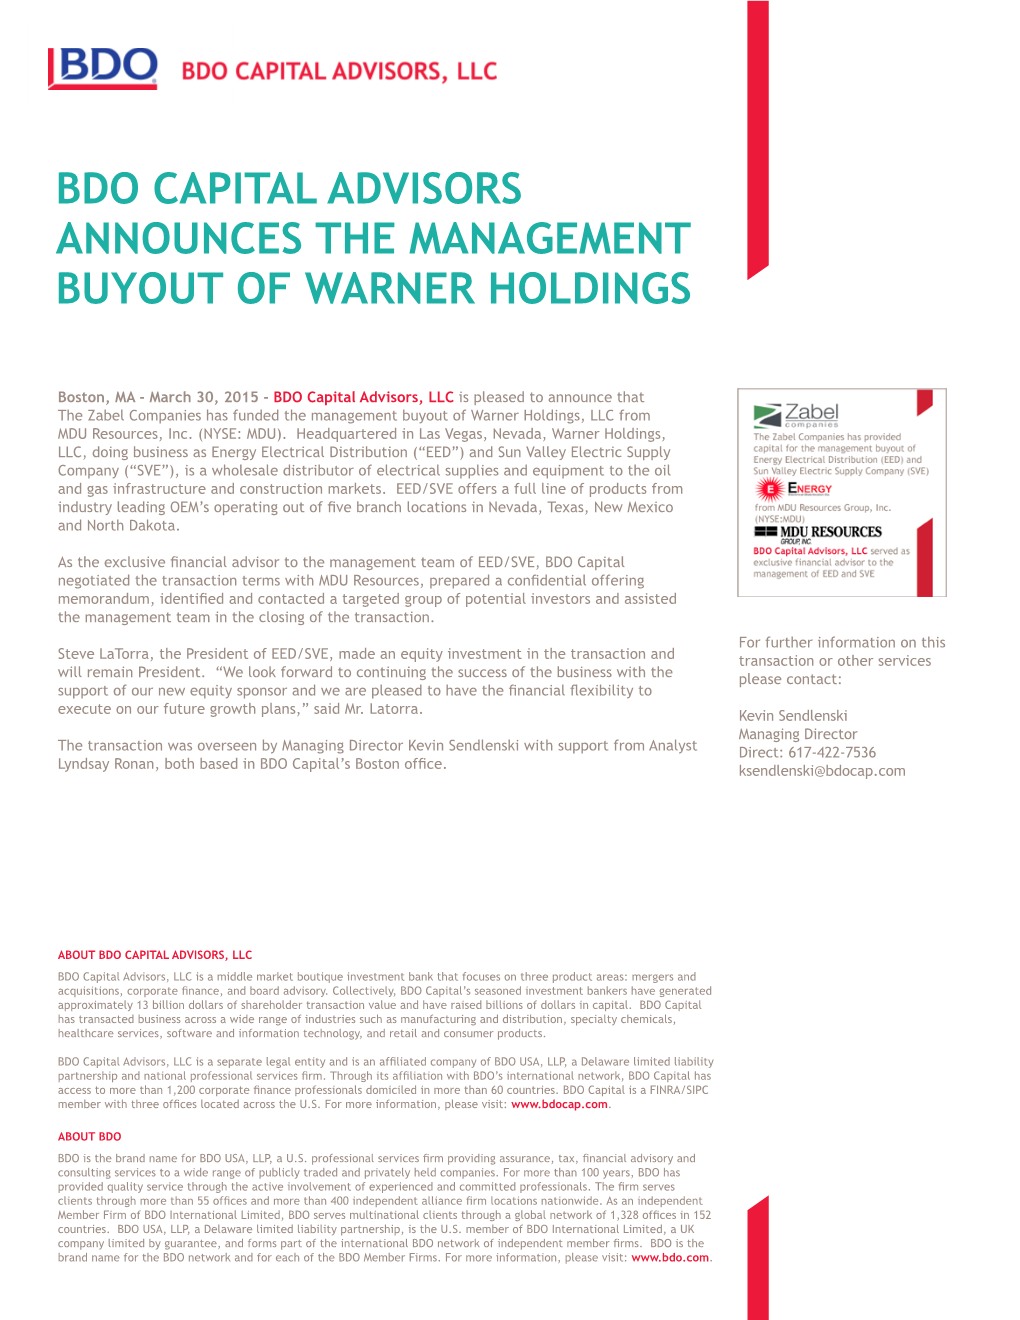 Bdo Capital Advisors Announces the Management Buyout of Warner Holdings